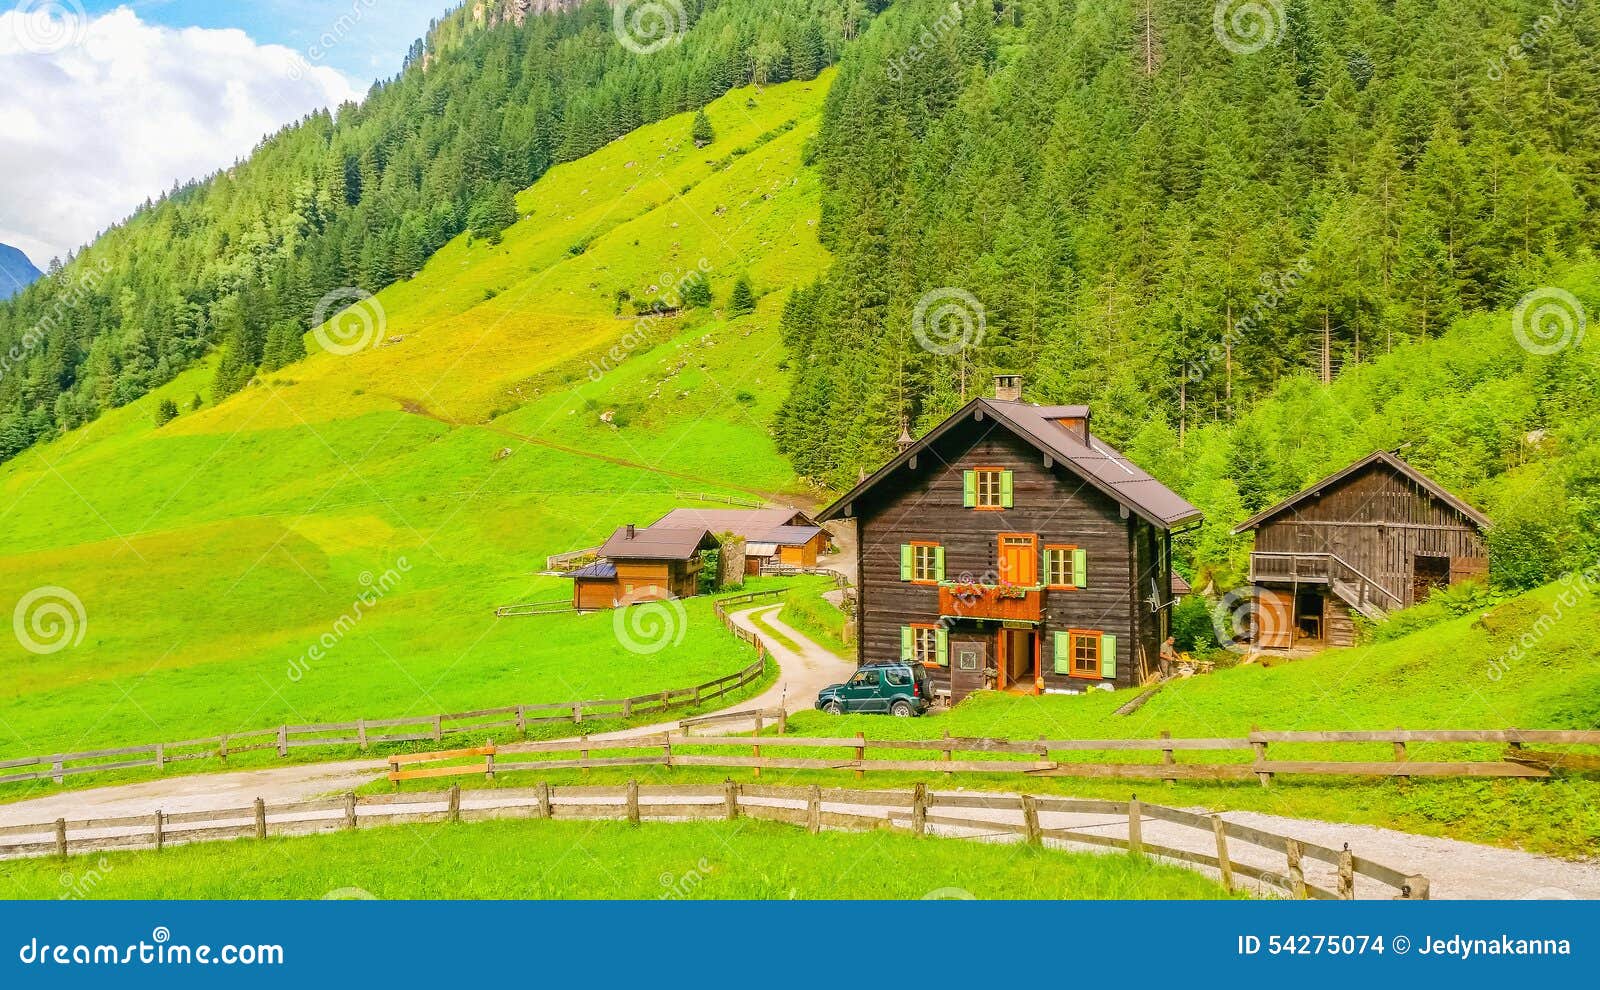 Typical Alpine Buildingm Green Meadows In Austria Stock Photo Image